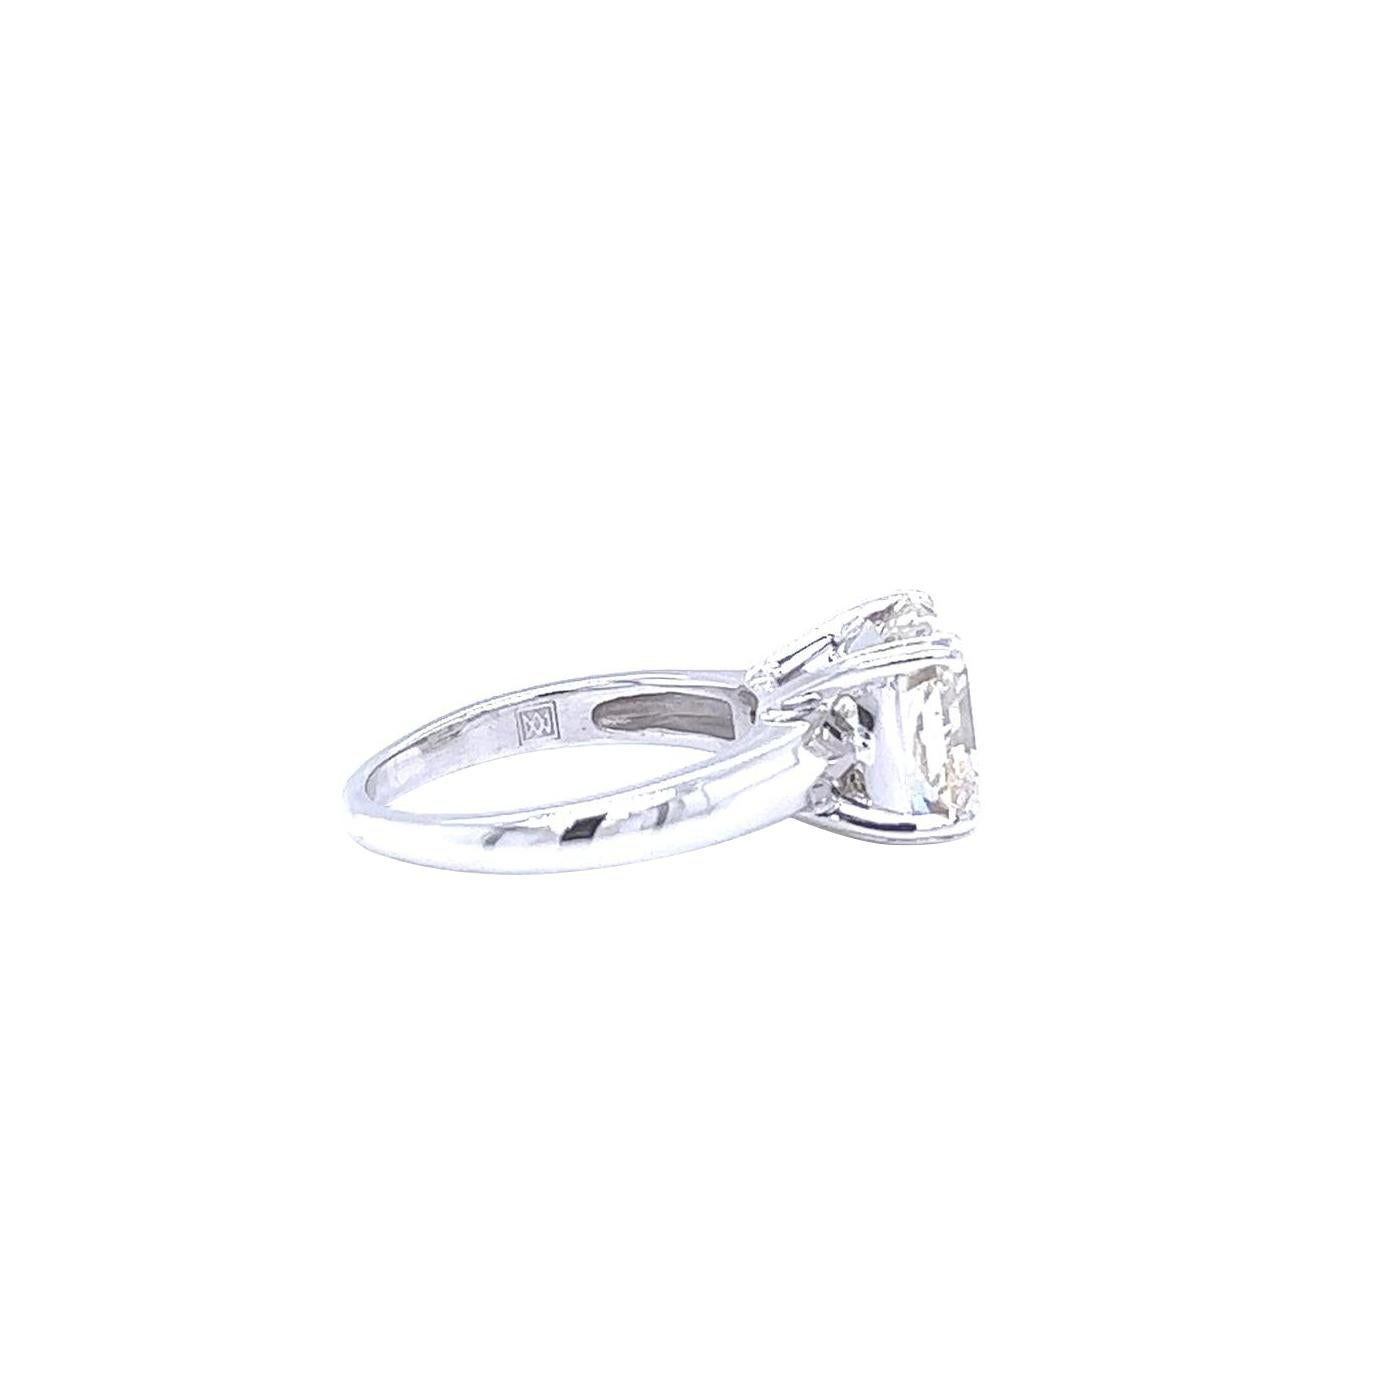 Modernist 4.28 Carat Natural Square Radiant Cut Diamond Engagement Ring in Platinum For Sale